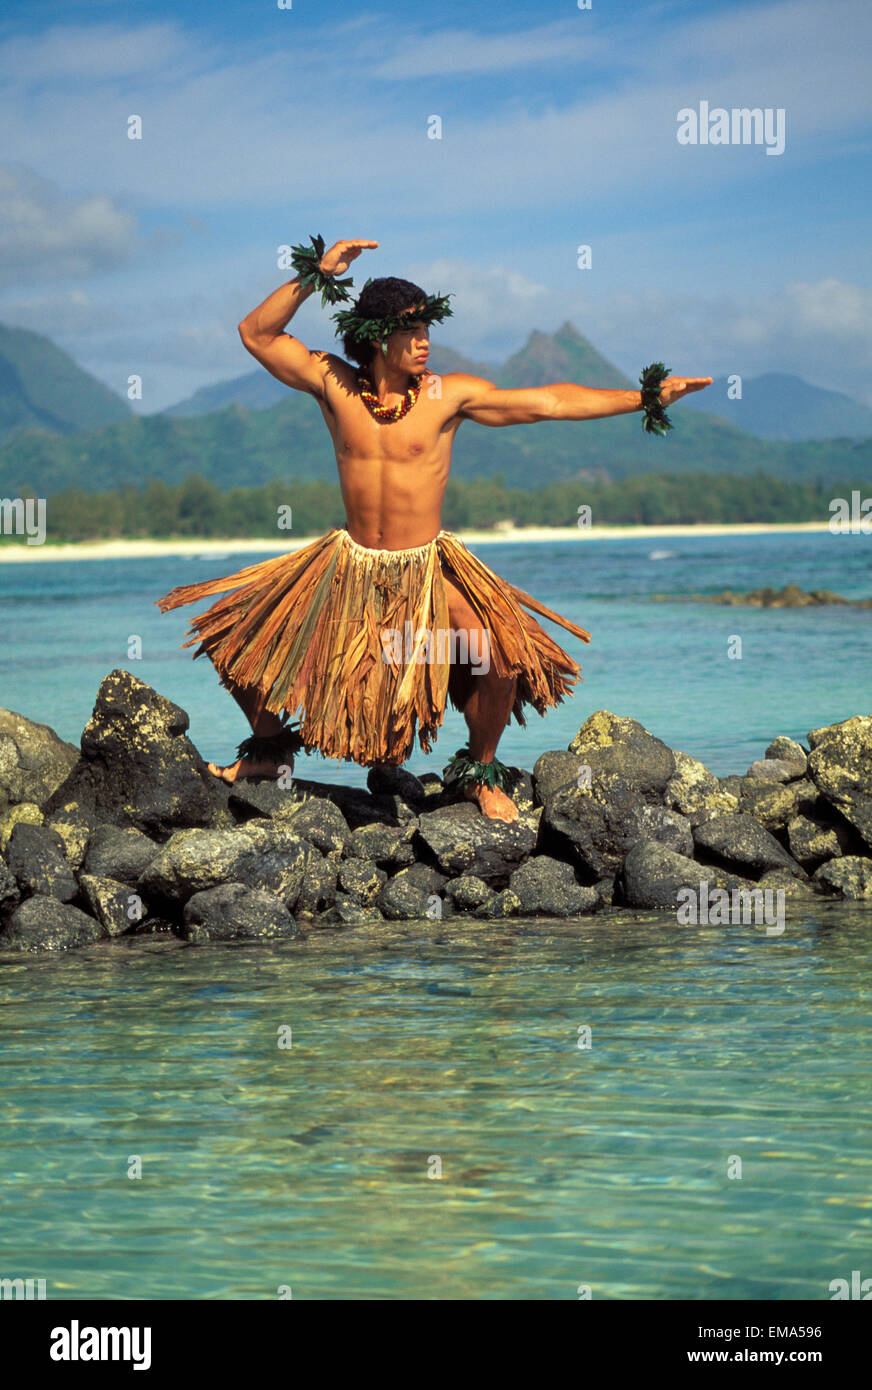 Hawaii, Kane Kahiko Hula On Reef In Bay, Posing In Traditional Dress ...